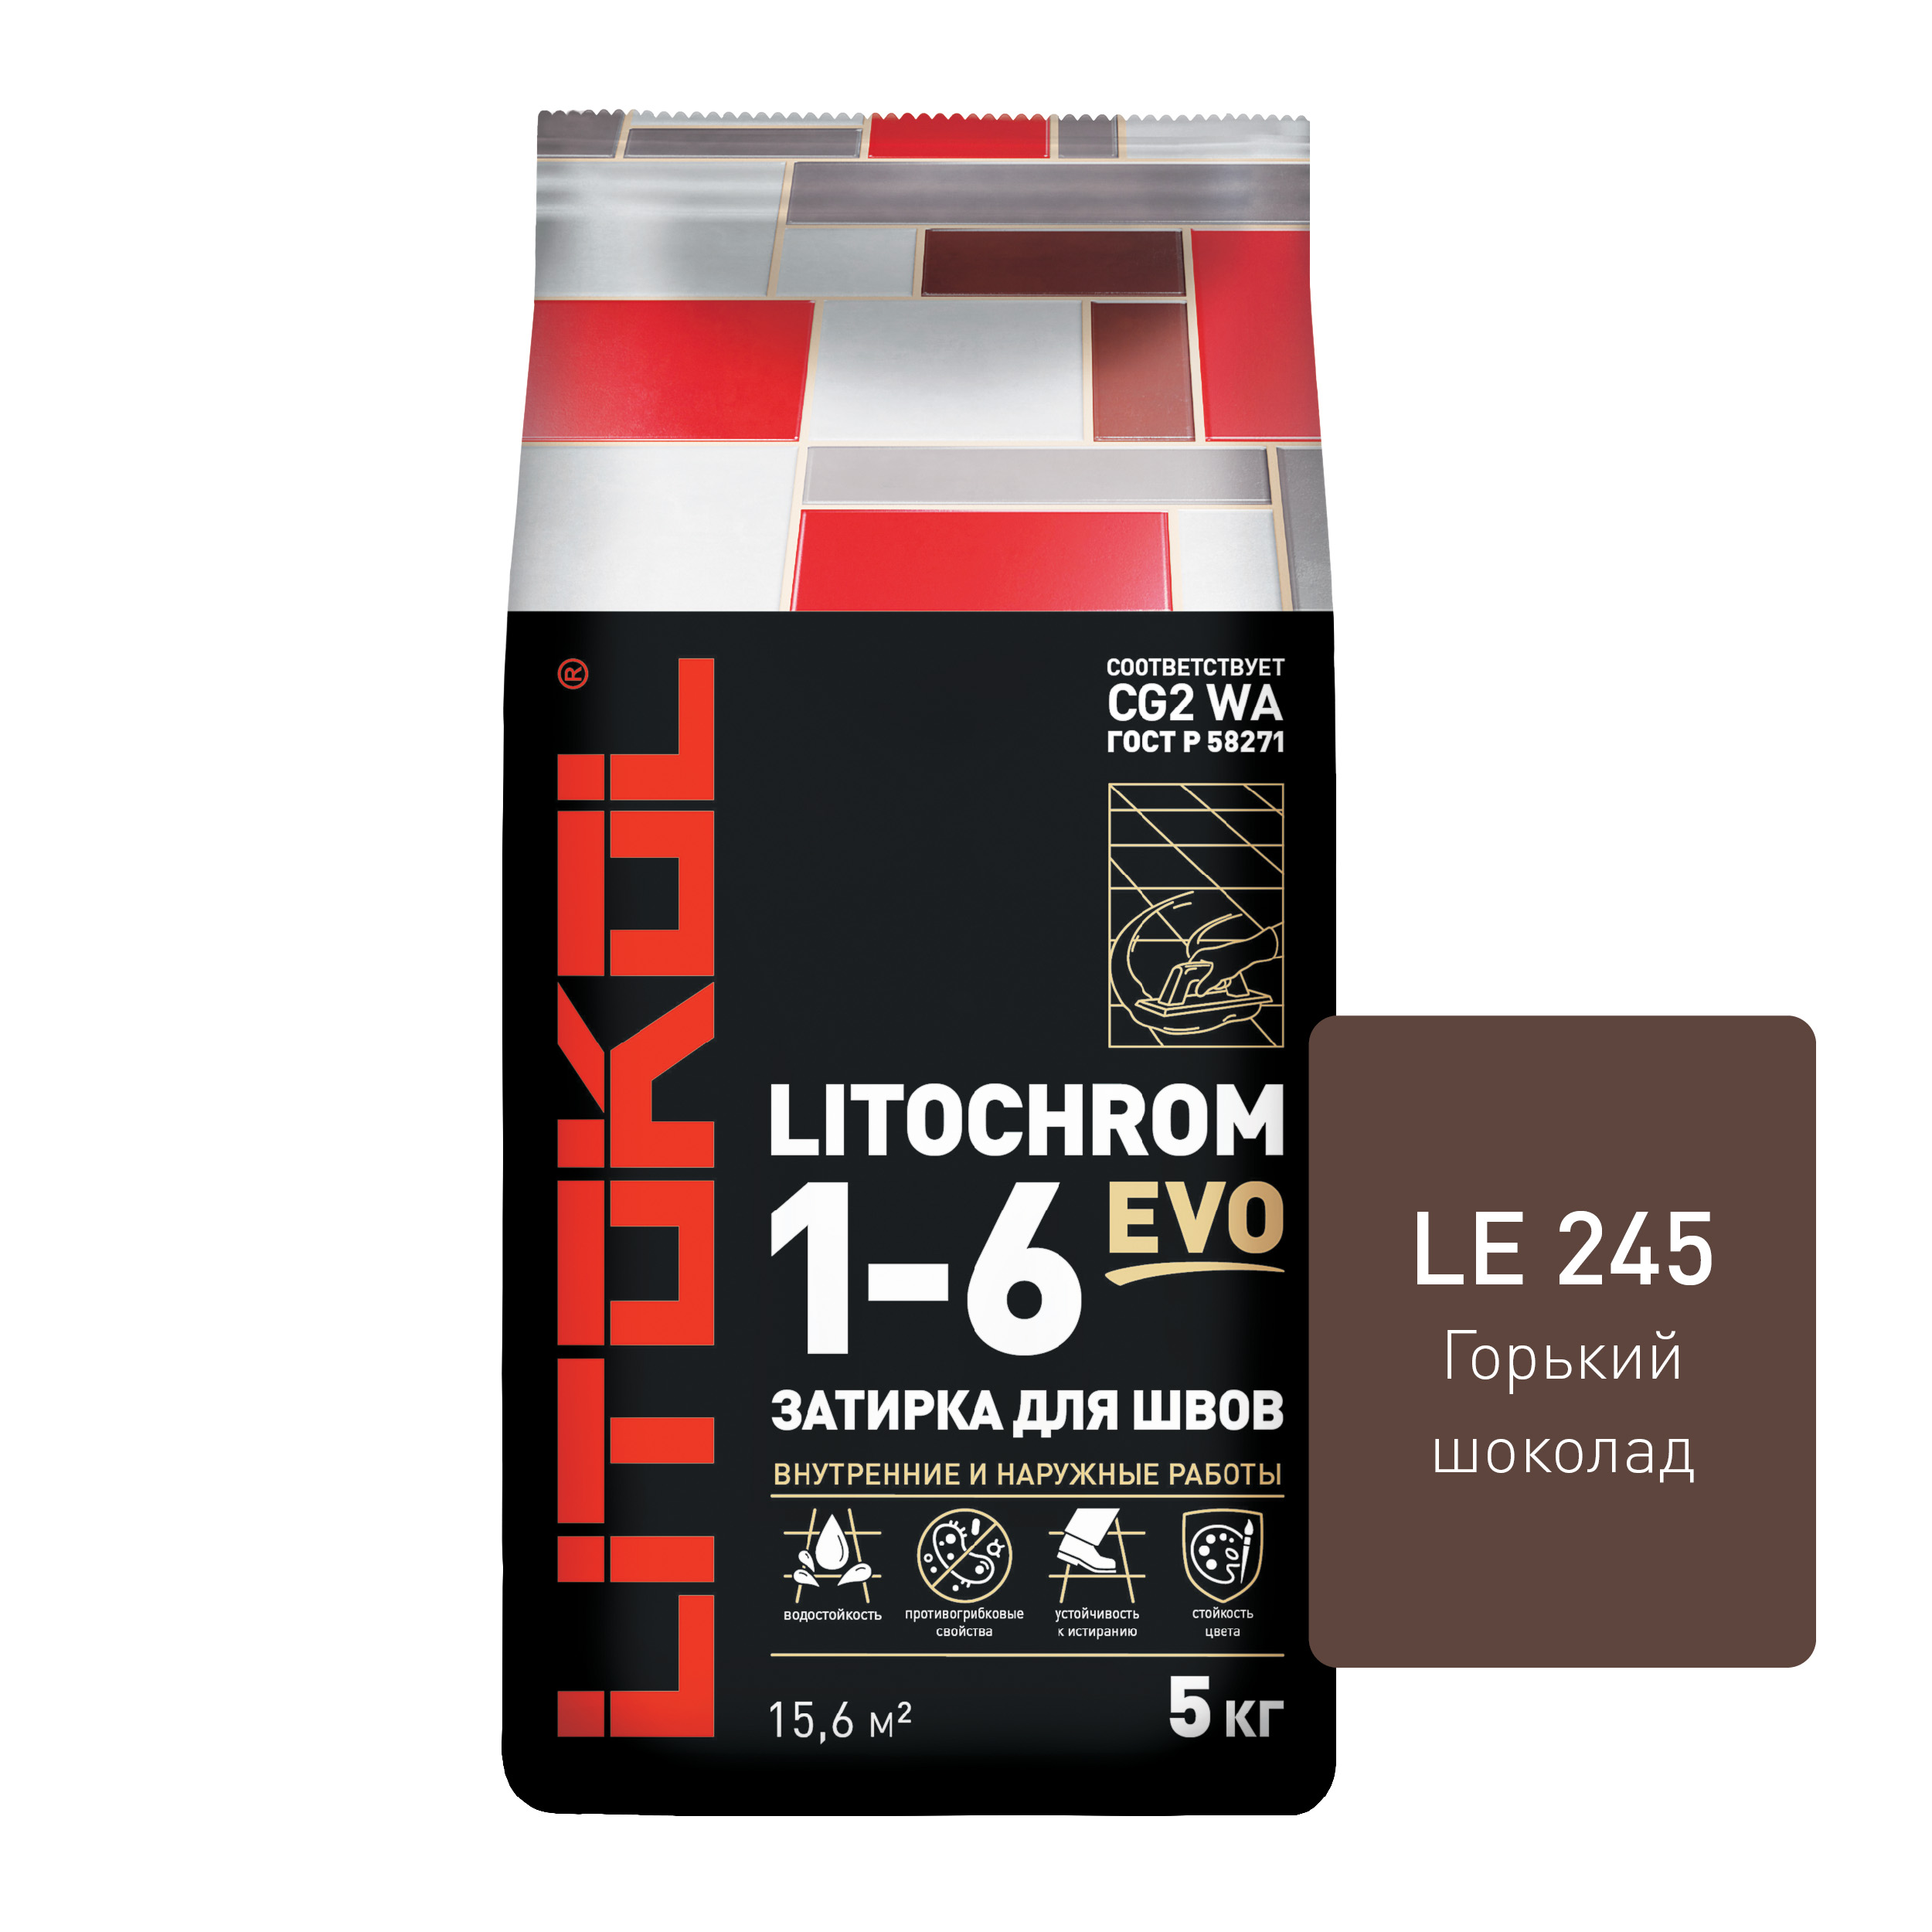 Цементная затирка LITOKOL LITOCHROM 1-6 EVO LE.245 Горький шоколад, 5 кг шоколад вдохновение горький с миндалем 75% какао 100 гр